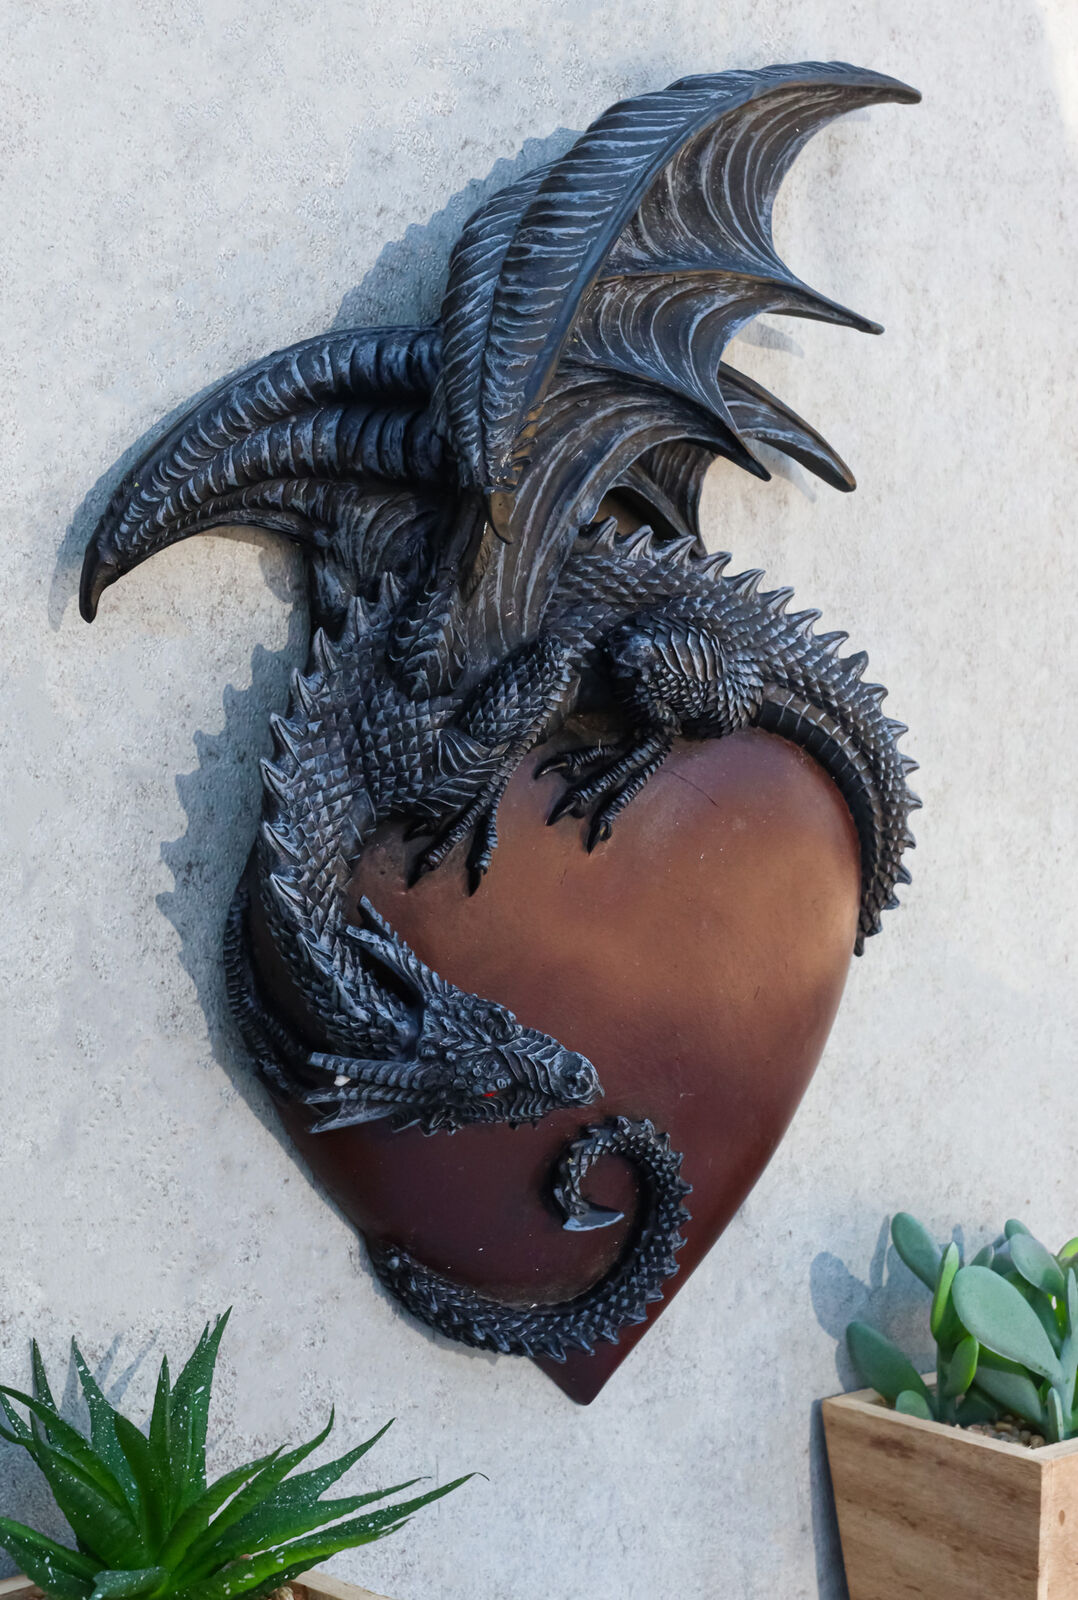 Ebros Mythical Gothic Dragon Heart Wall Plaque Decor Figurine Valentine's Dragon